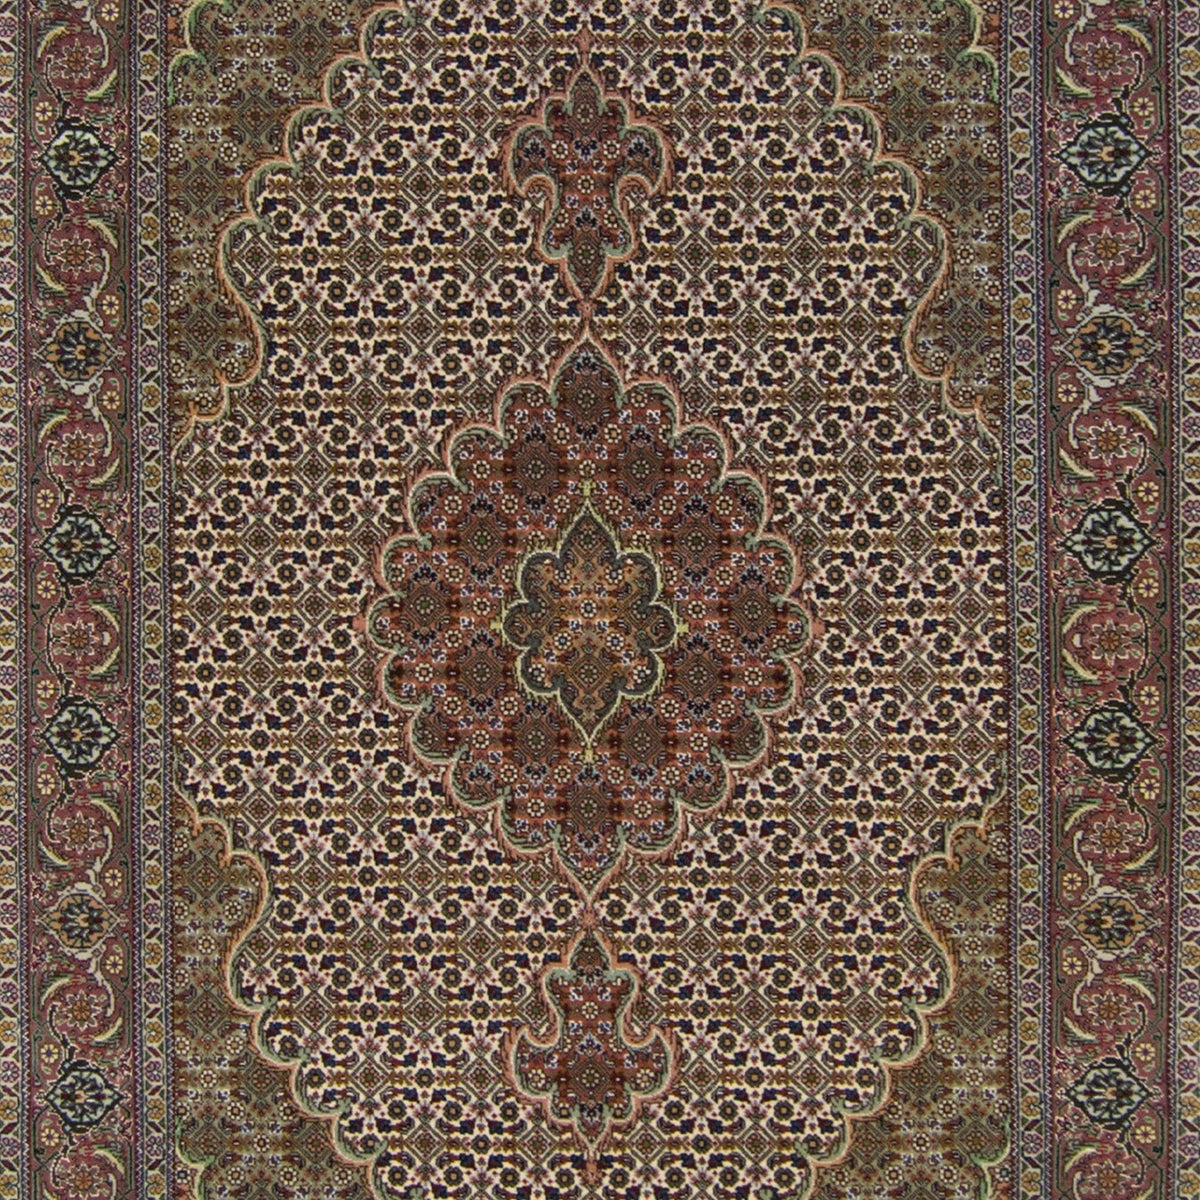 Super Fine Hand-knotted Persian Wool and Silk Tabriz - Mahi Design Rug 100cm x 150cm